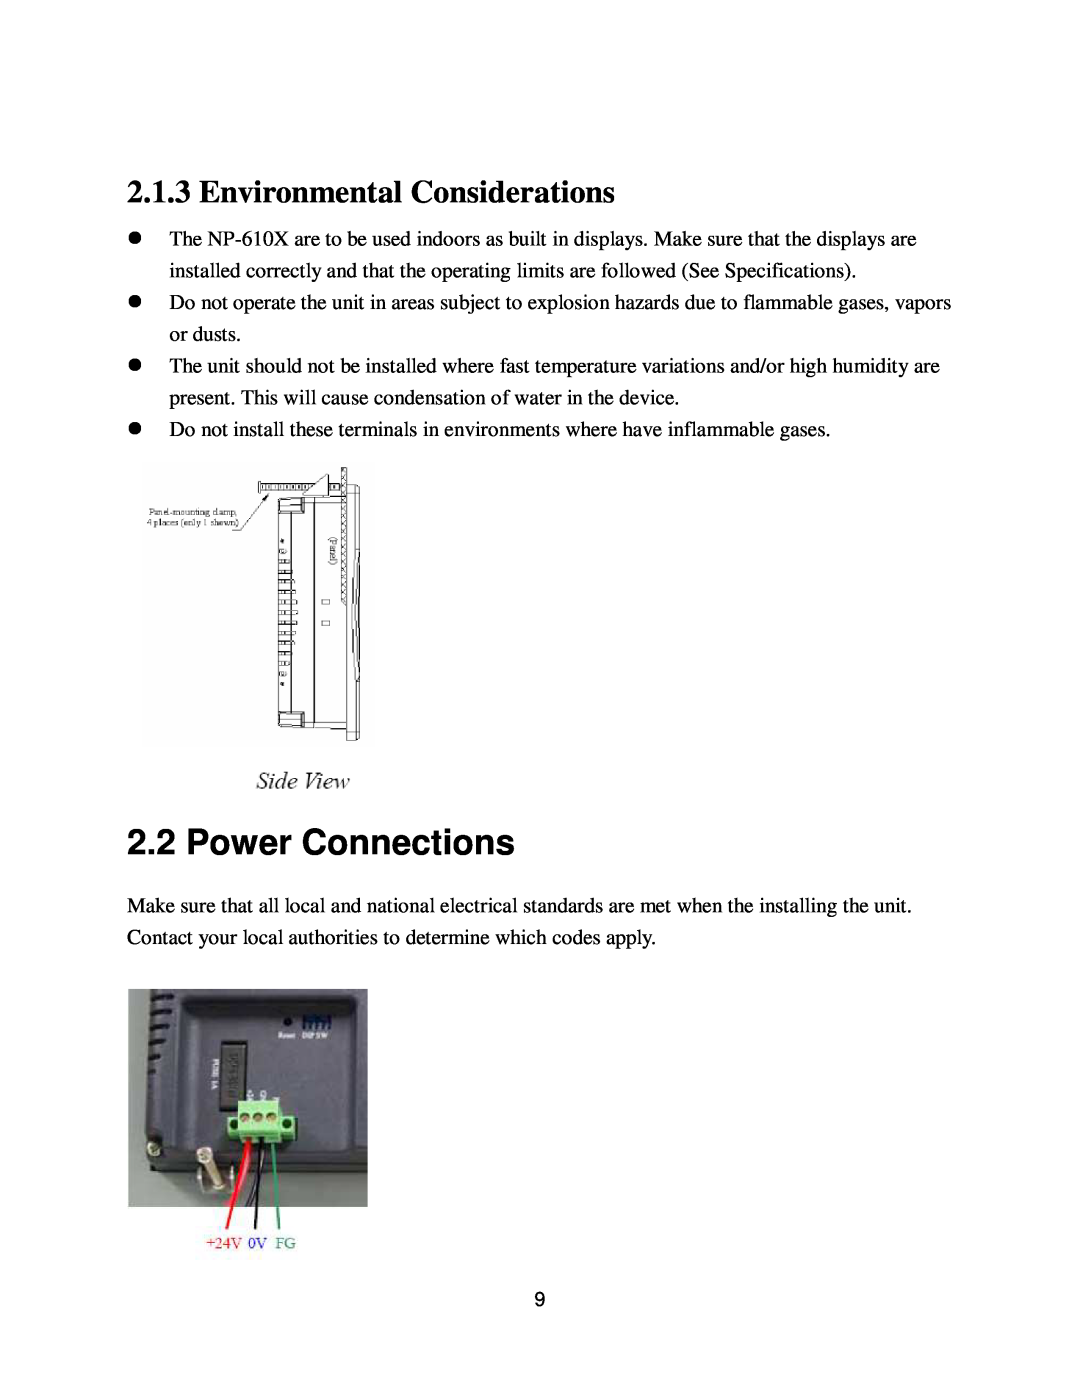 Nextar NP-610X user manual Power Connections, Environmental Considerations 